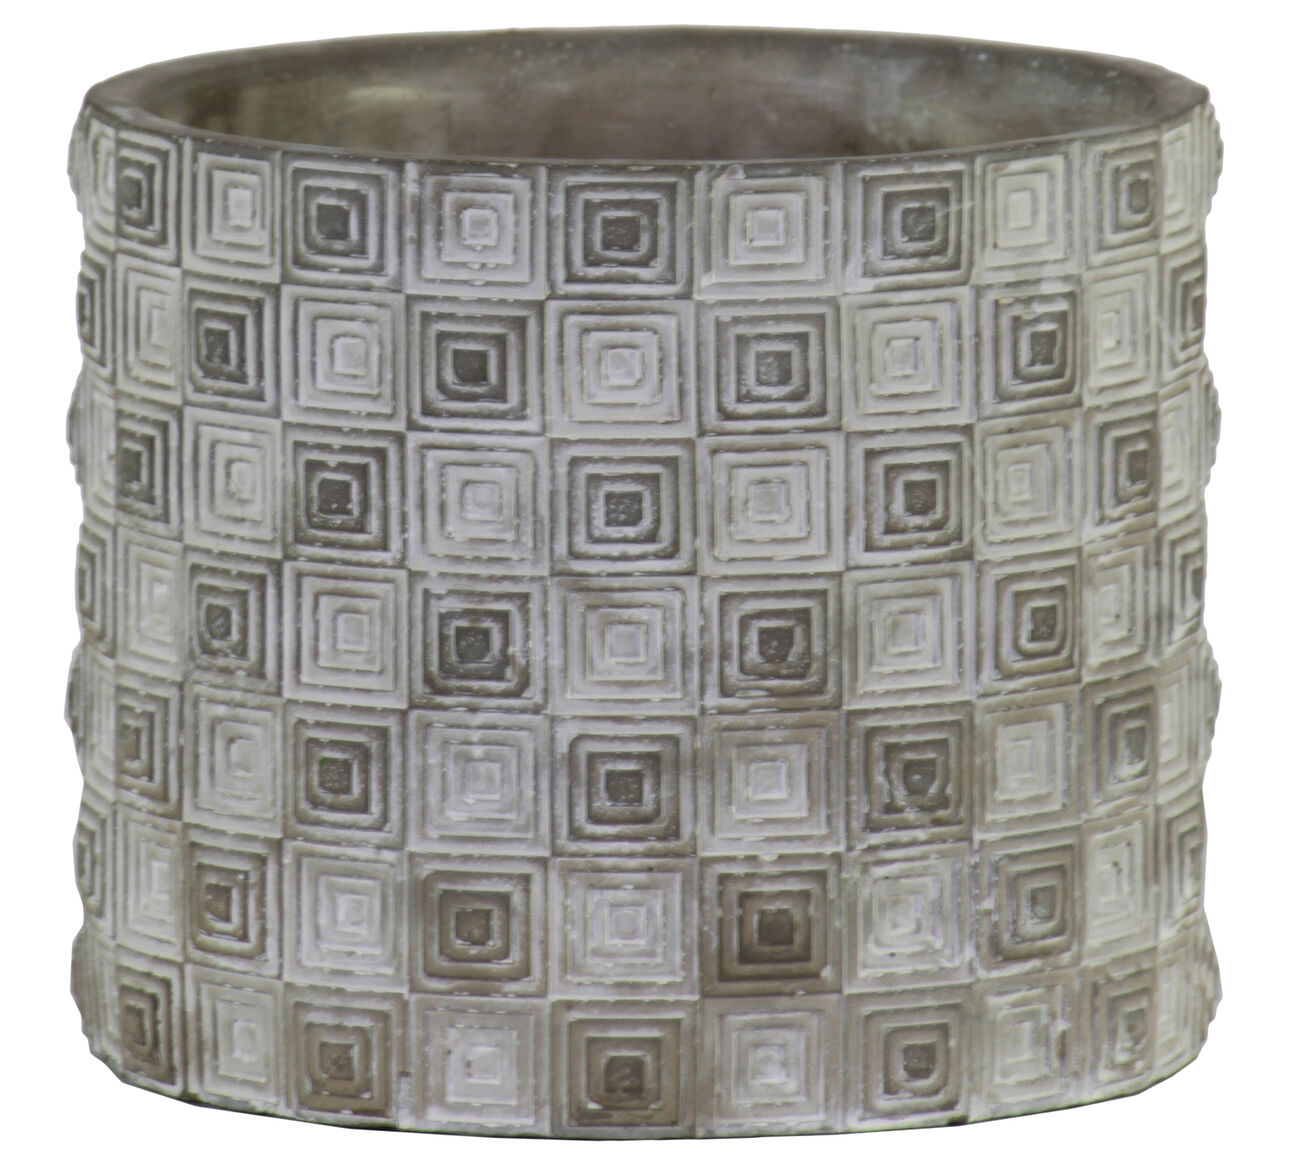 Circular Cement Pot with Embossed Geometrical Rectangular design, Gray